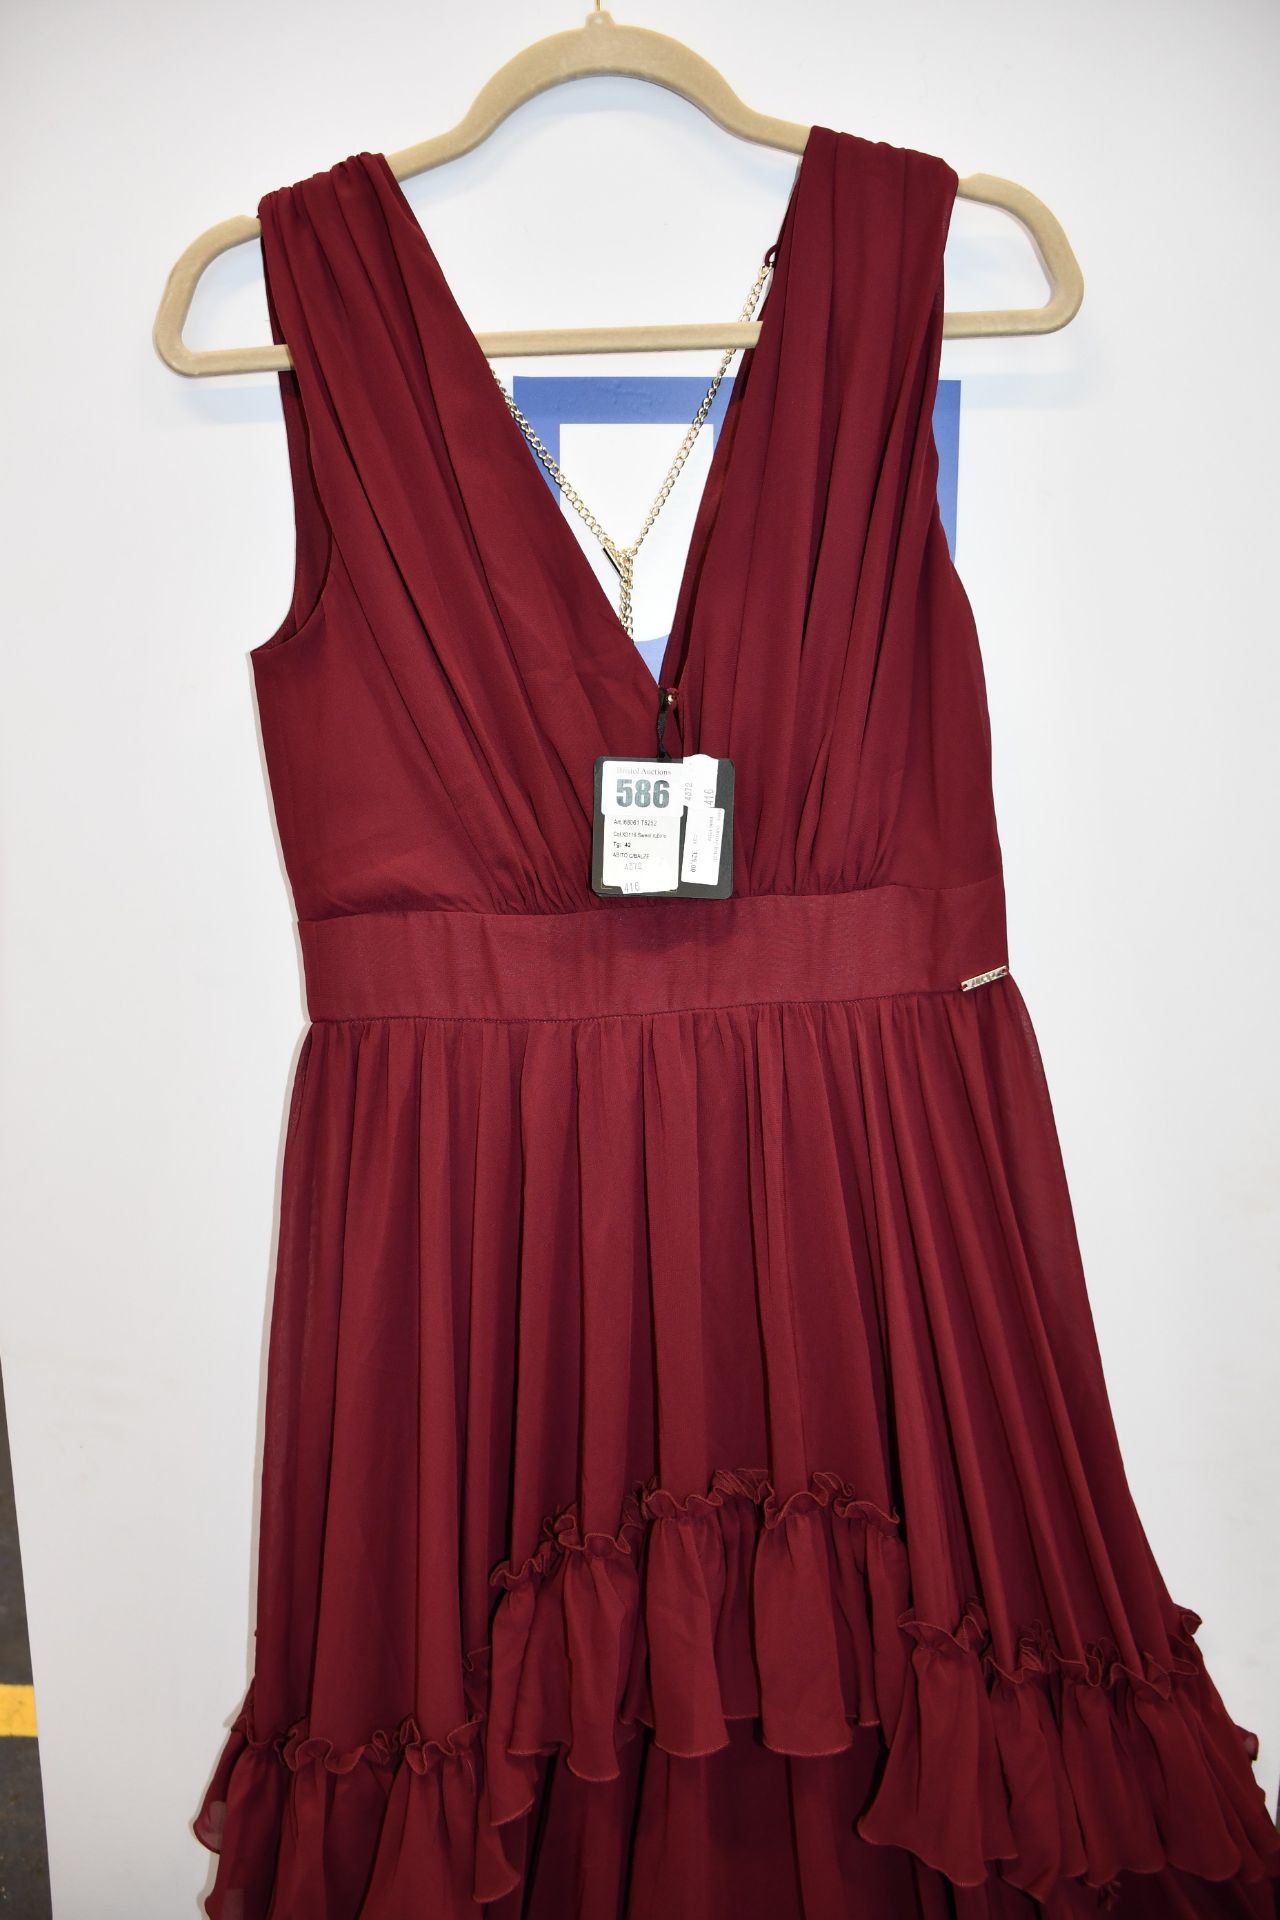 An as new Liu Jo Abito C/Blaze dress in sweet rubino (TG 42 - RRP £329).